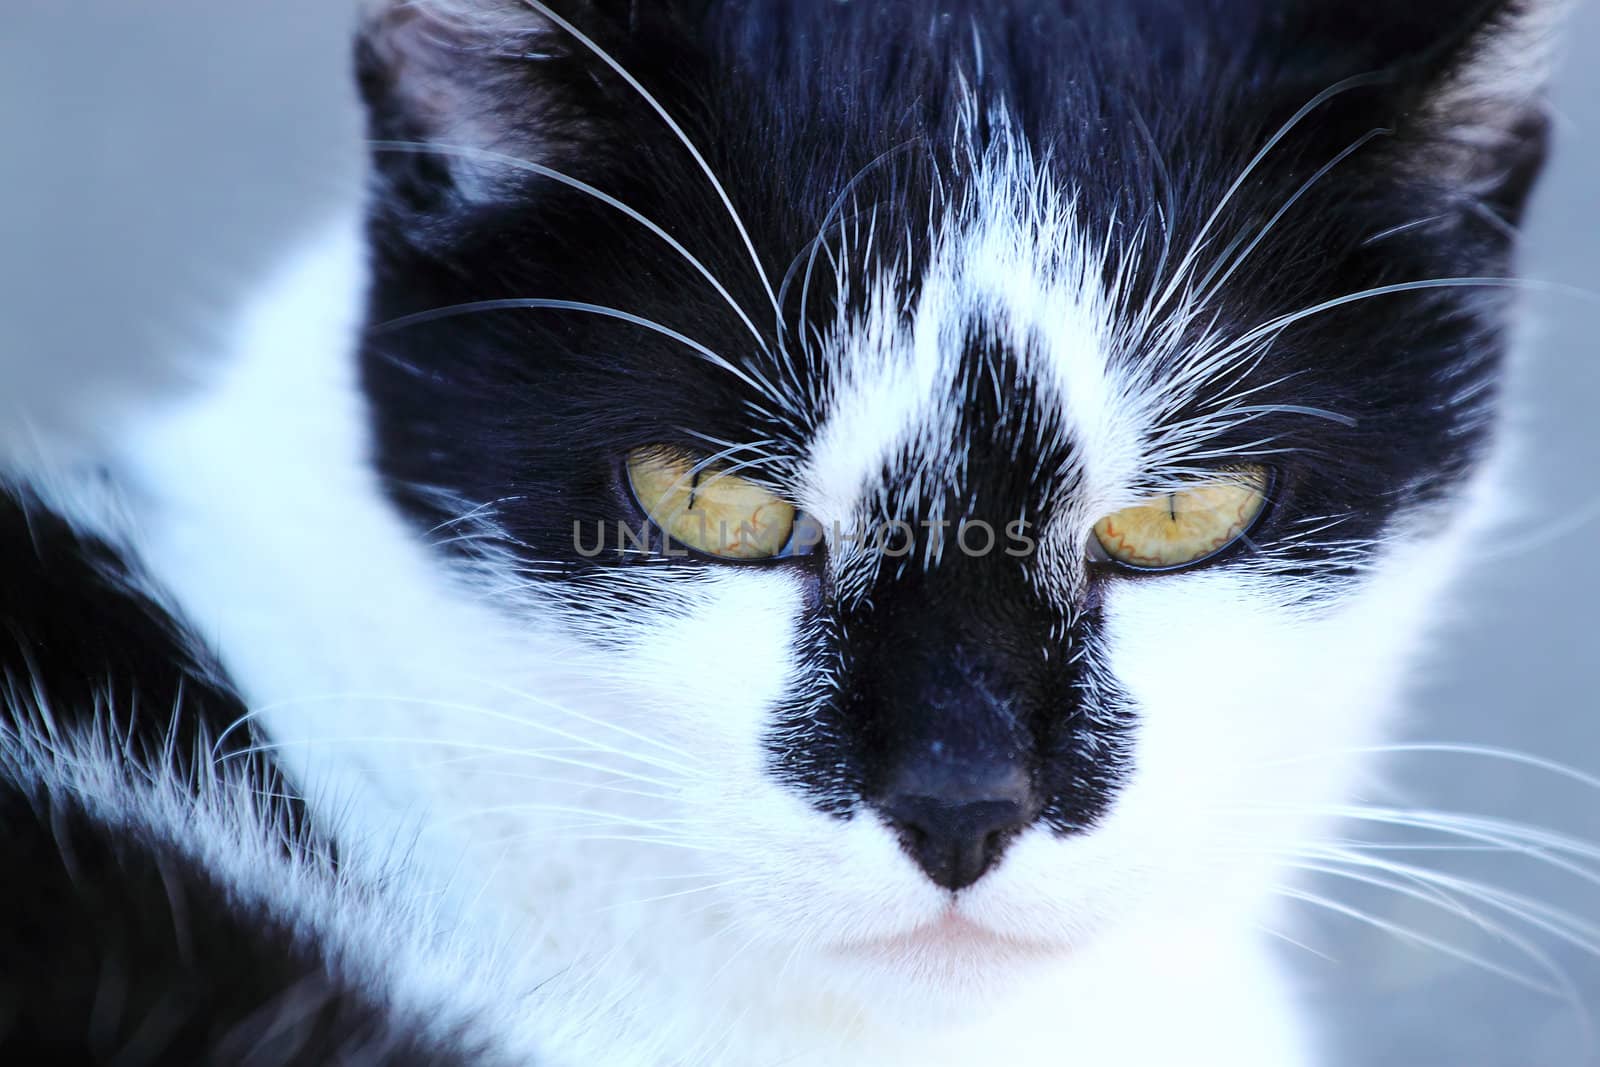 very nice close-up portrait of cat